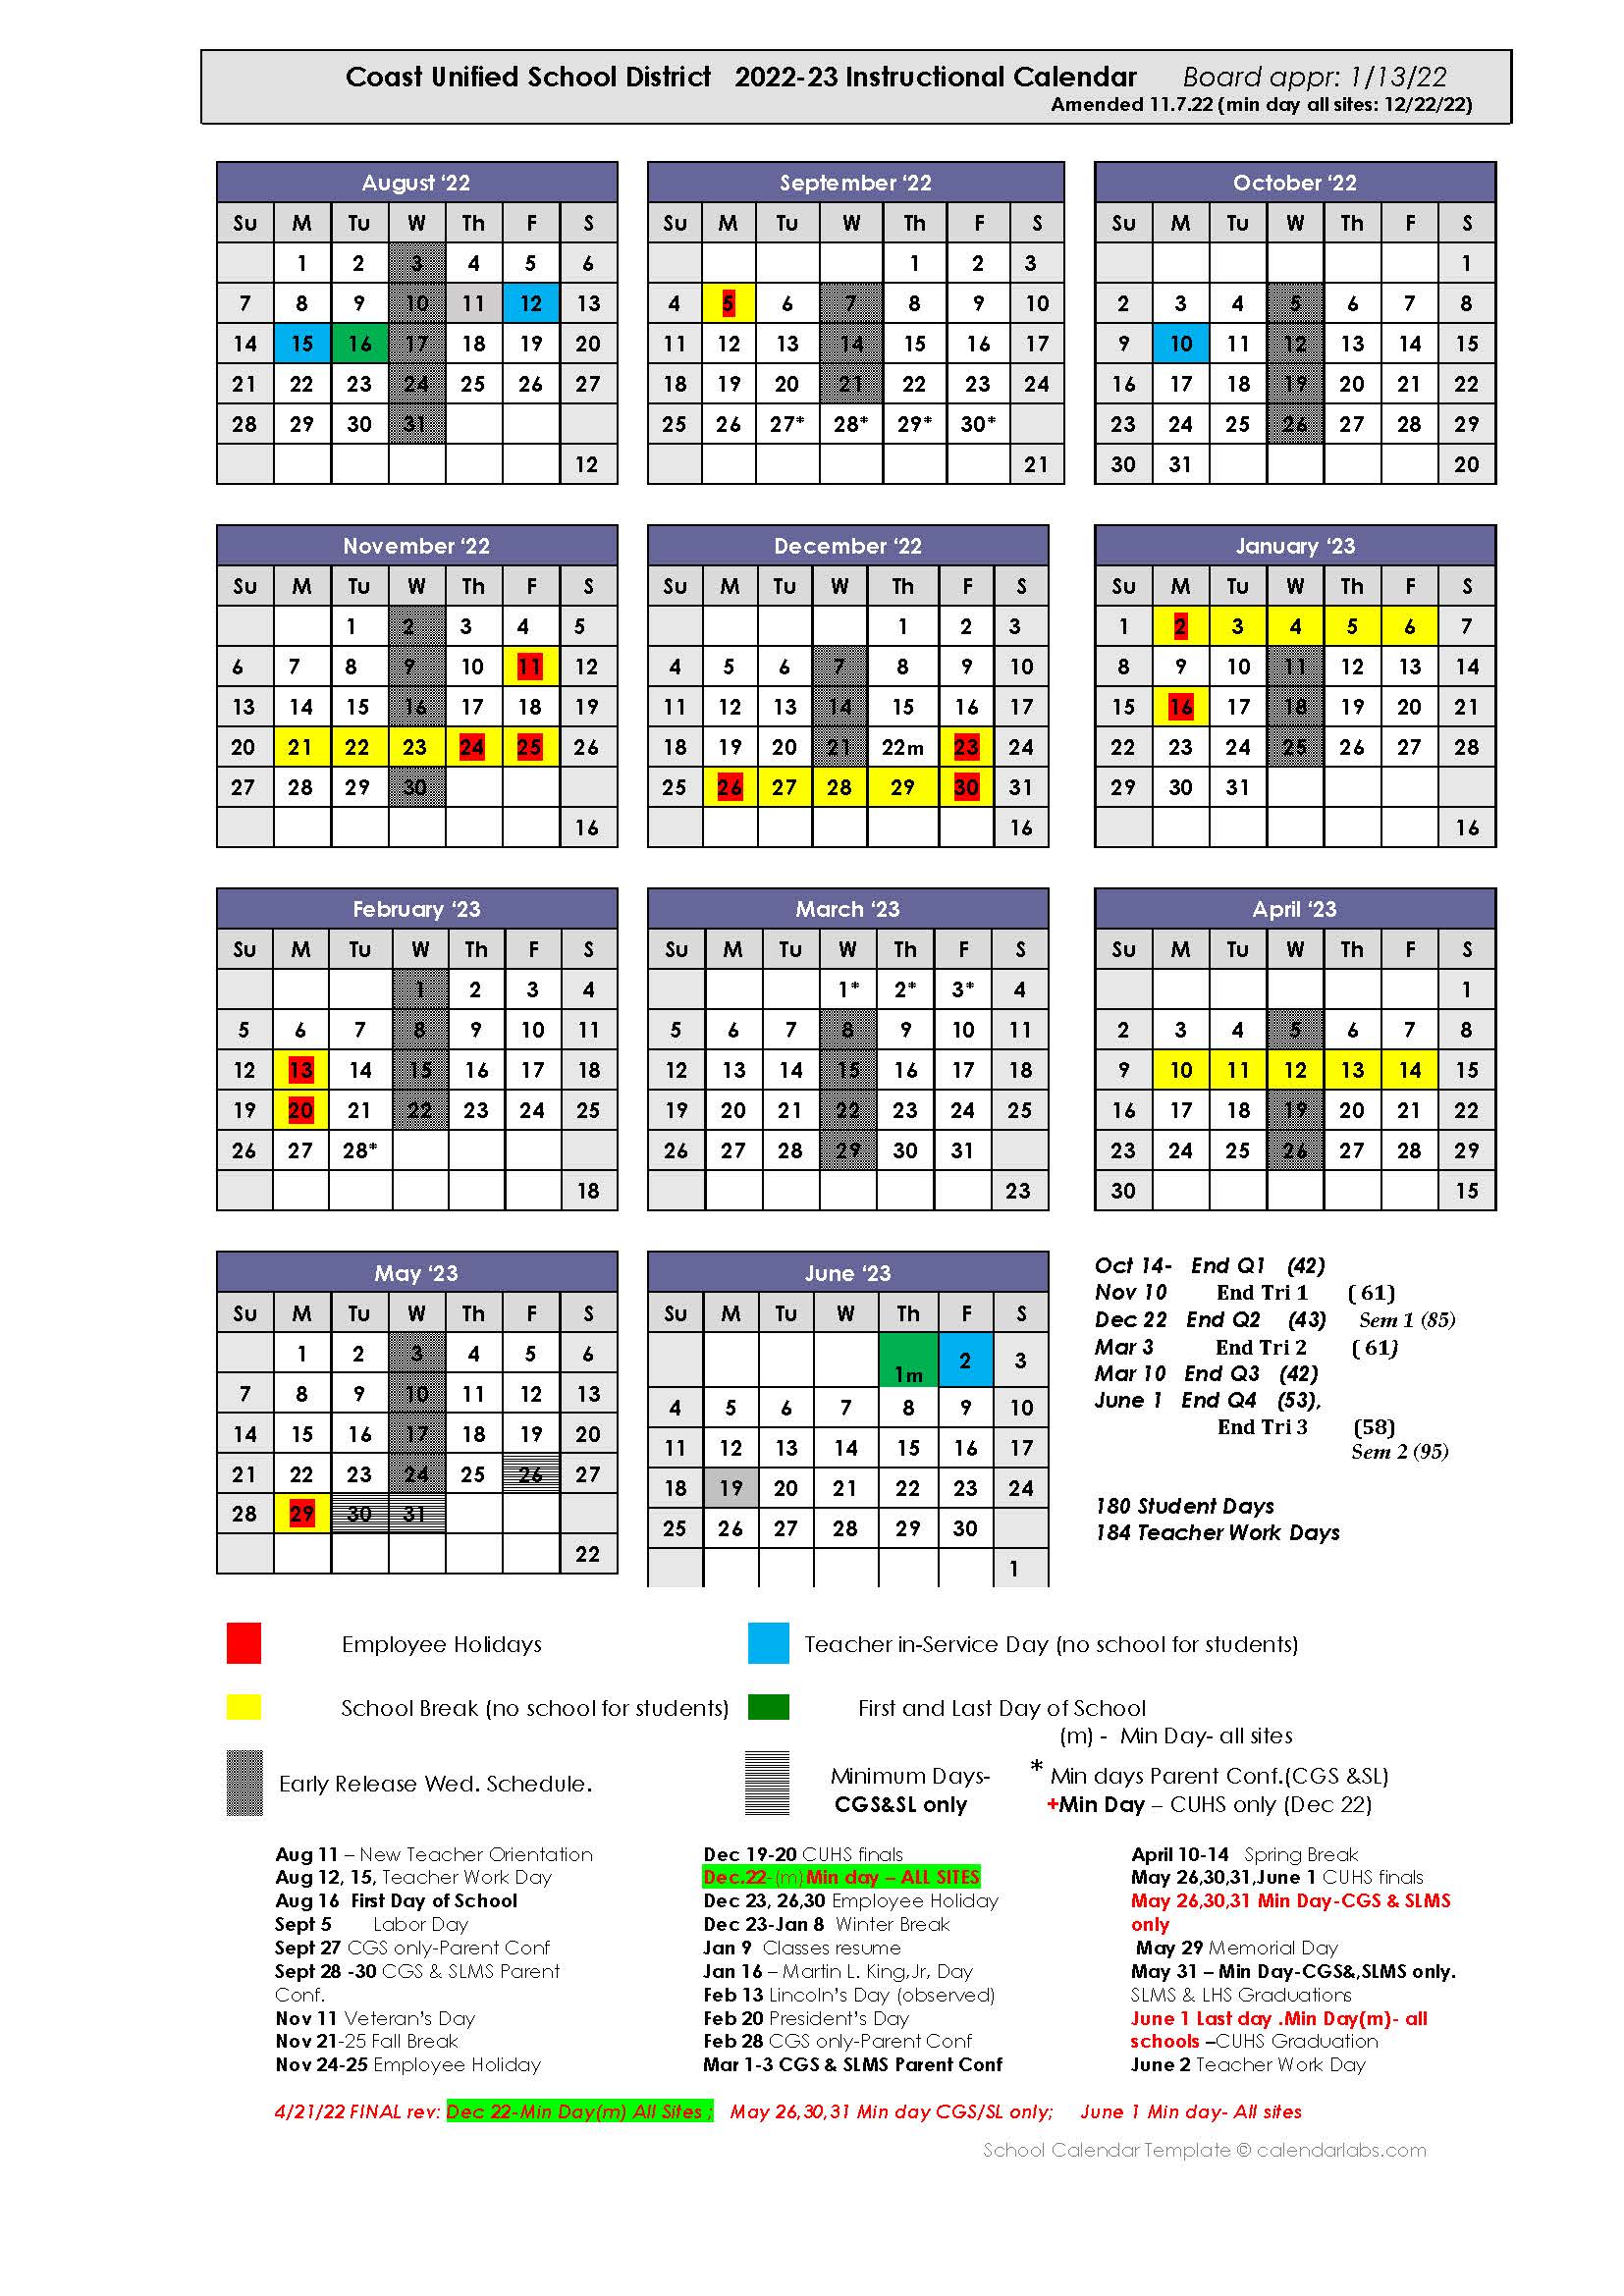 Coast Unified School District Calendar 2022 And 2023 PublicHolidays